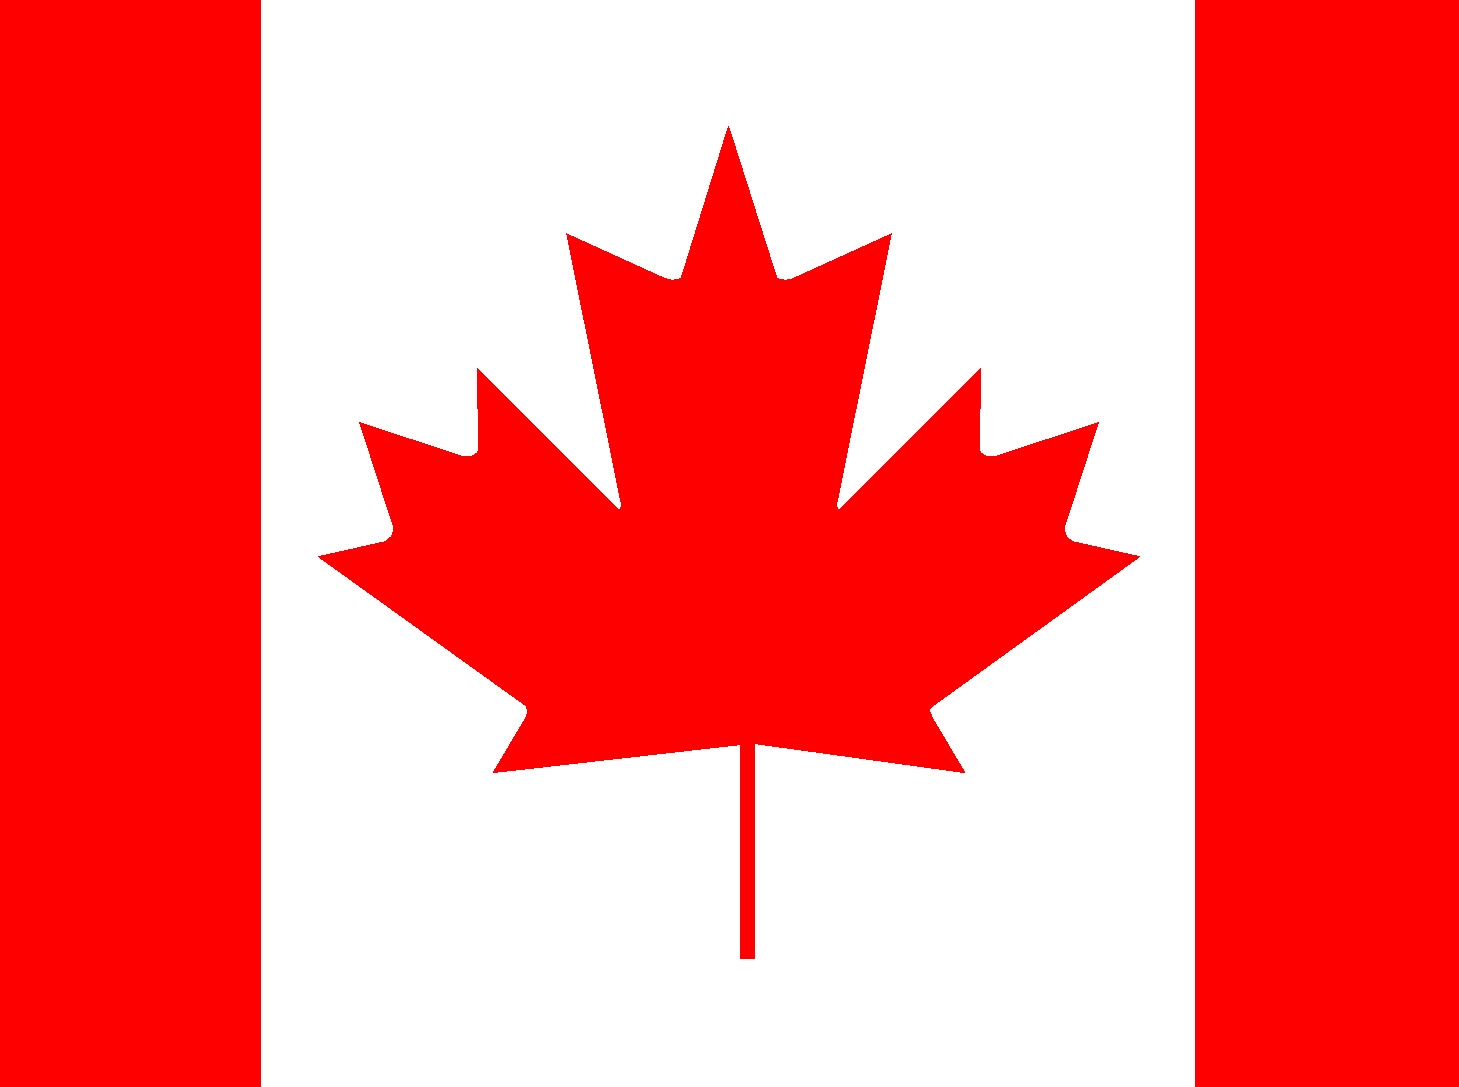 Canada Flag Image Jpeg - ClipArt Best